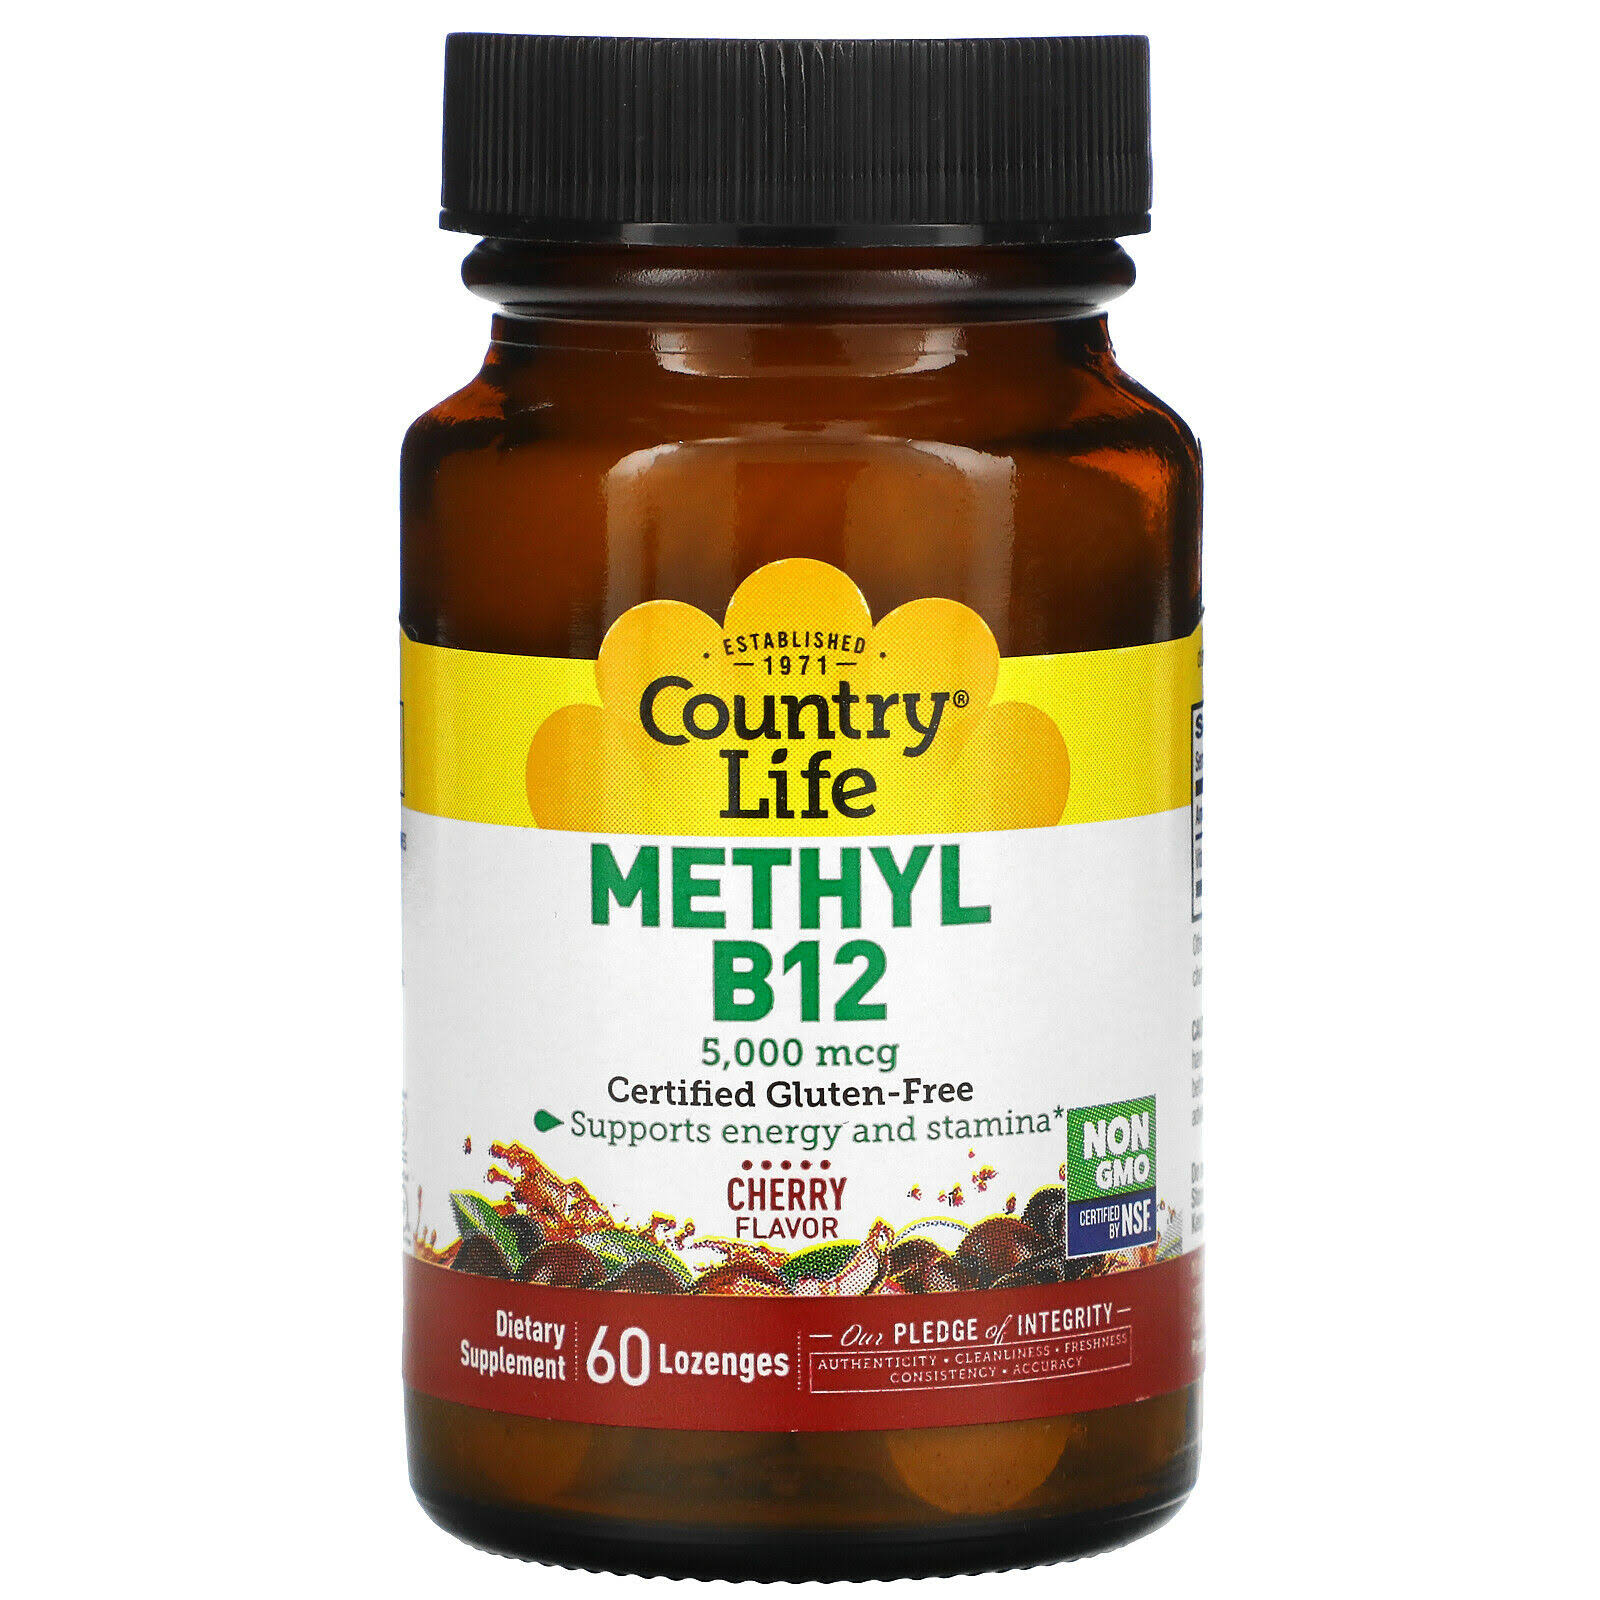 Country Life Methyl B12 Dietary Supplement - Cherry, 5000mcg 60 Lozenges